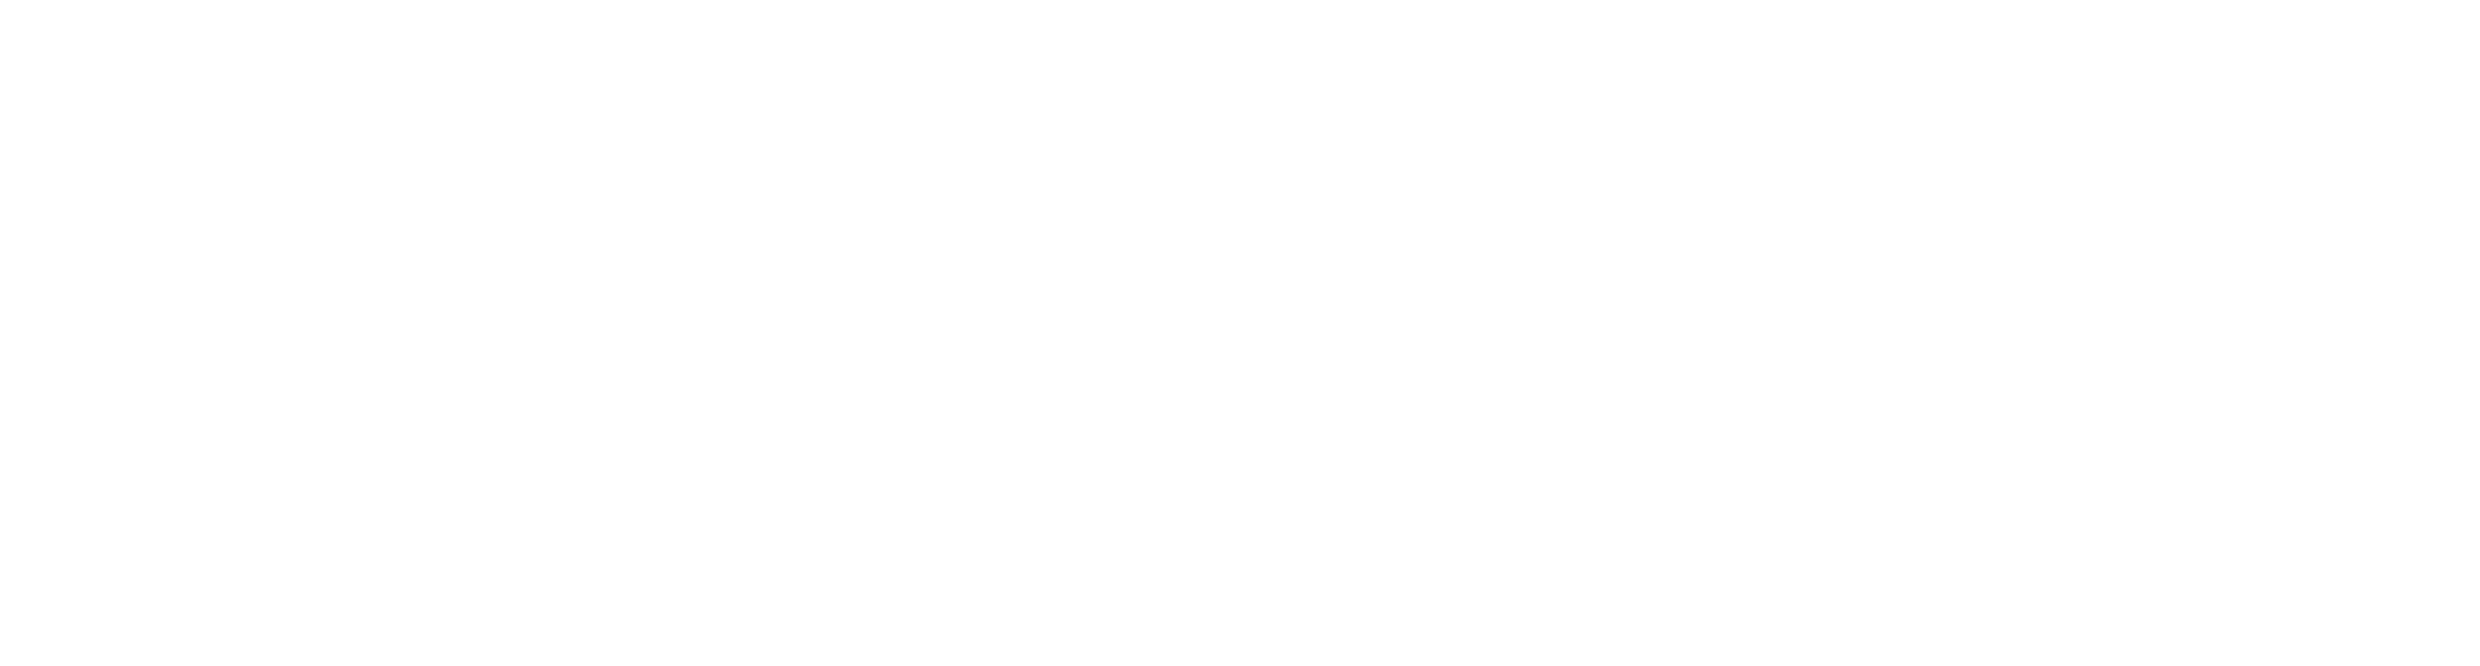 EOSC-Pillar Gateway